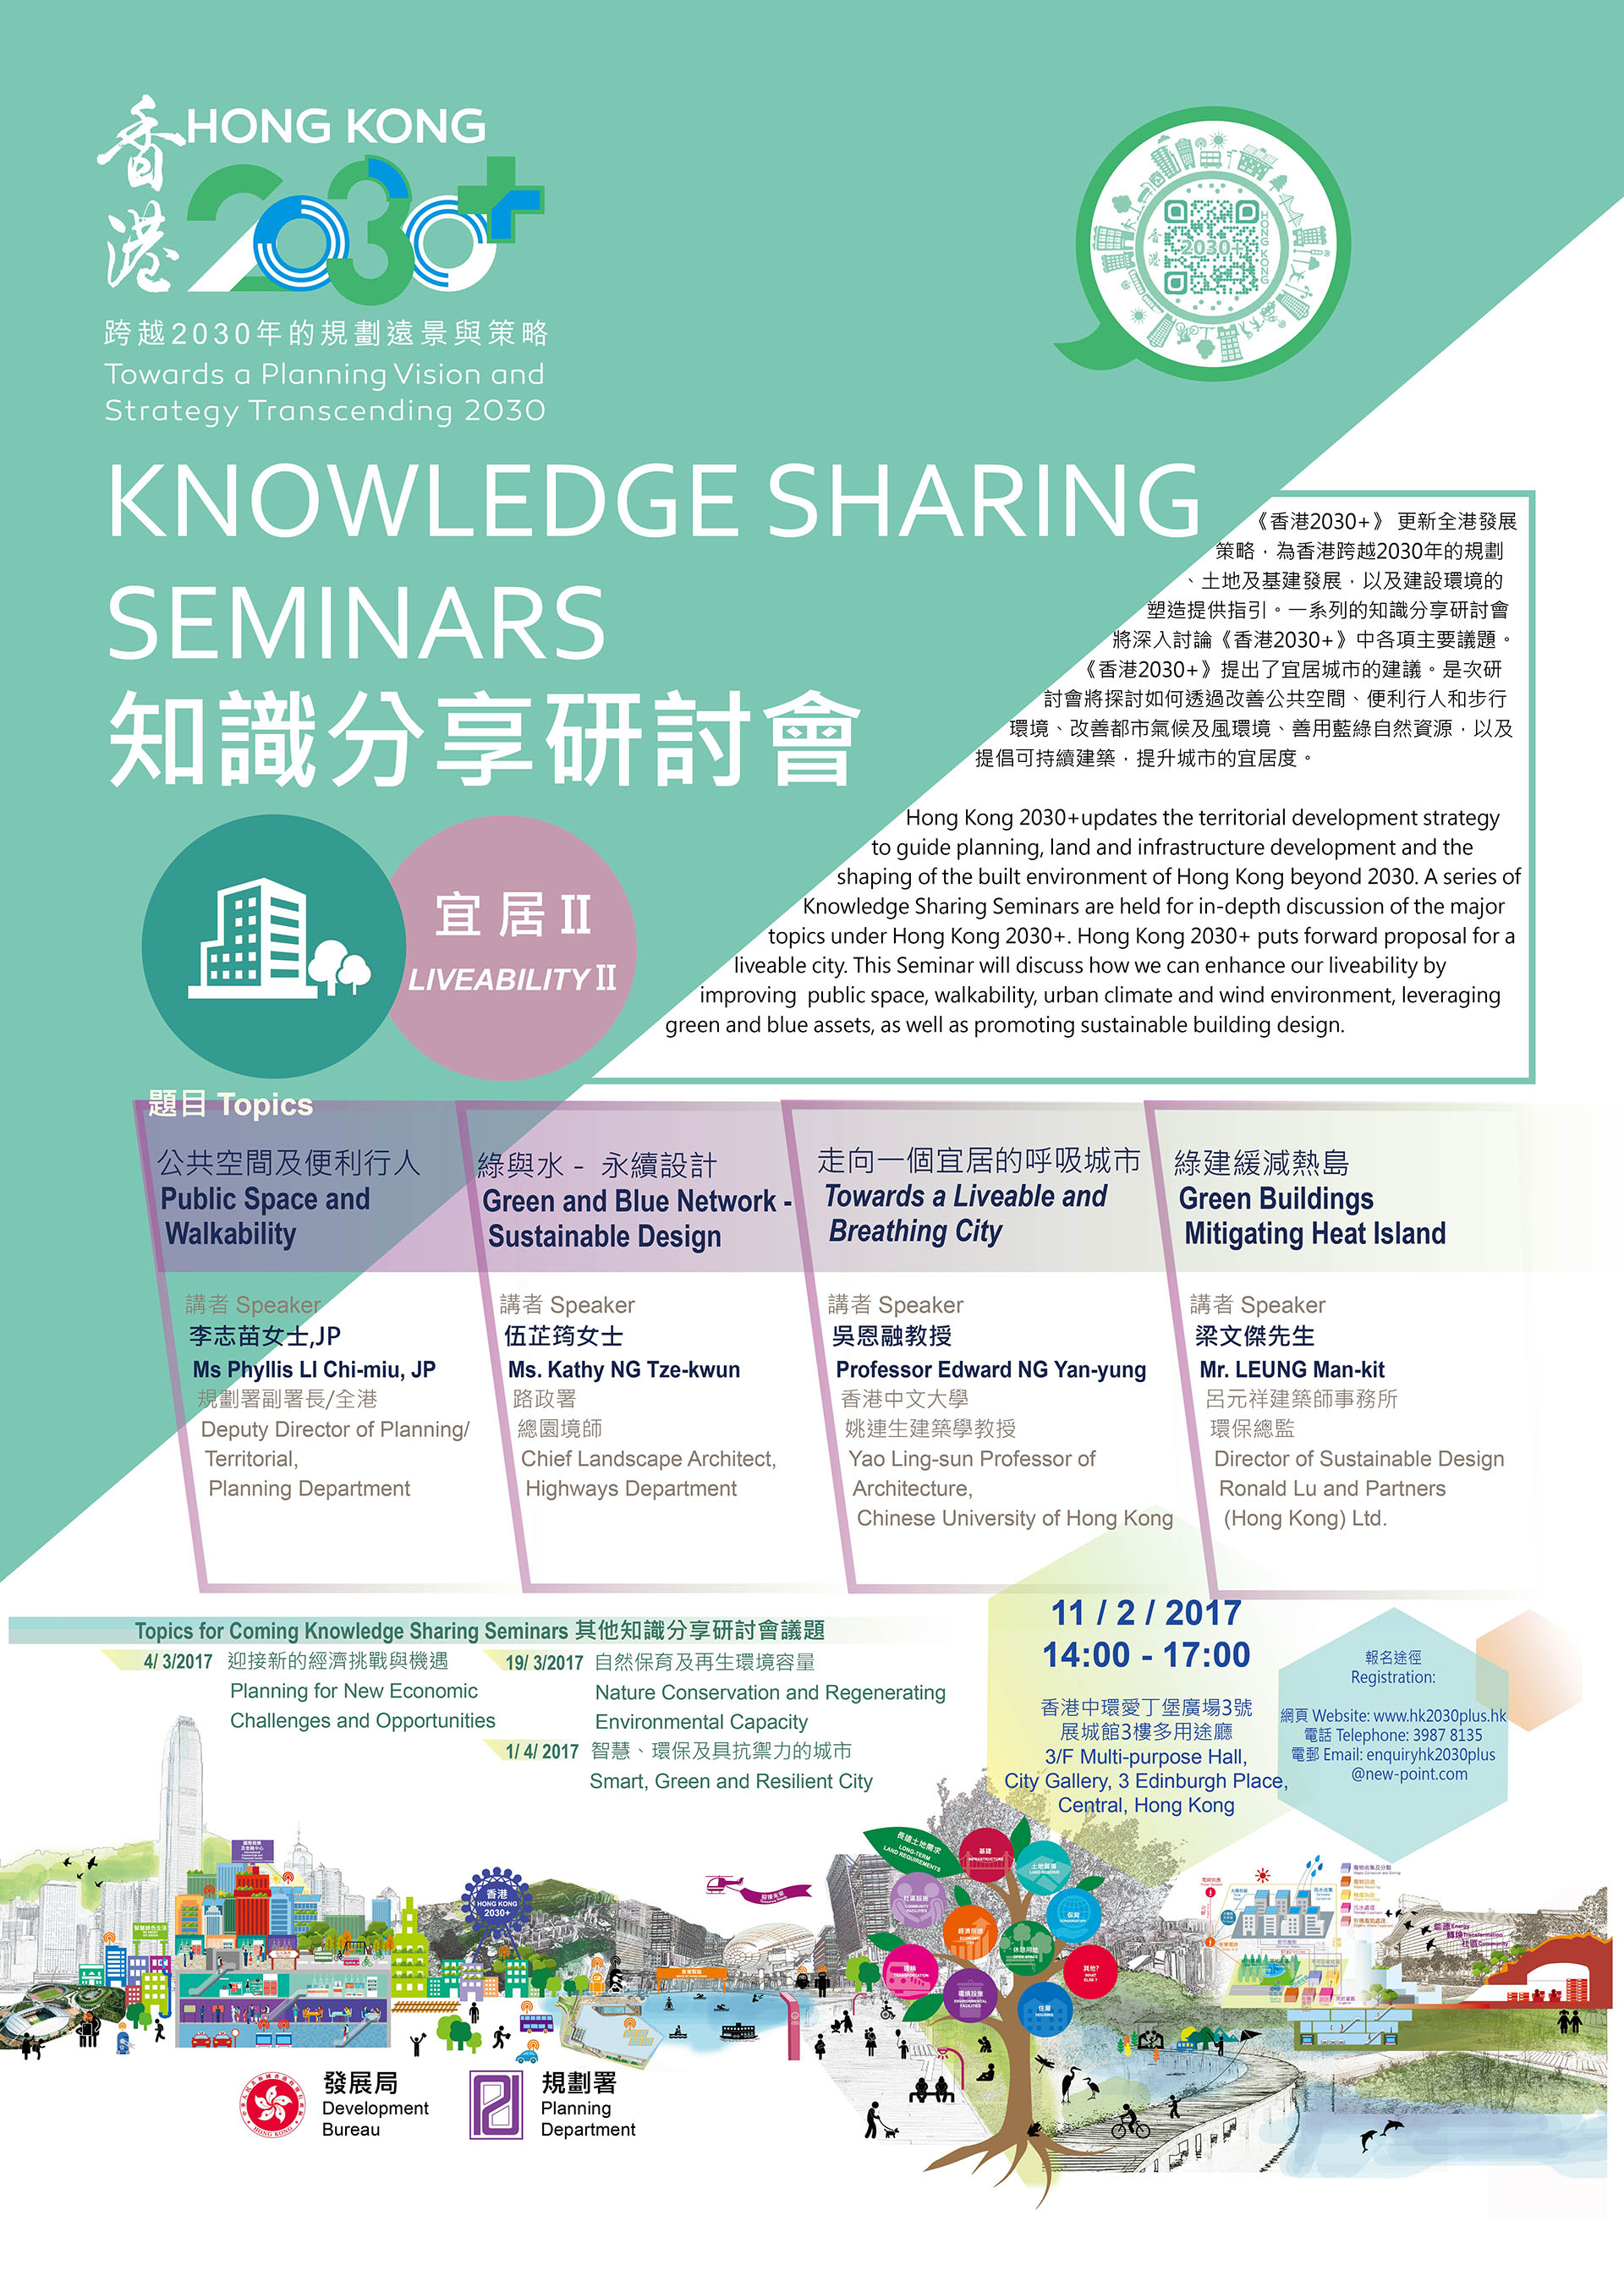 Knowledge Sharing Seminar - Liveability II (11/2/2017)